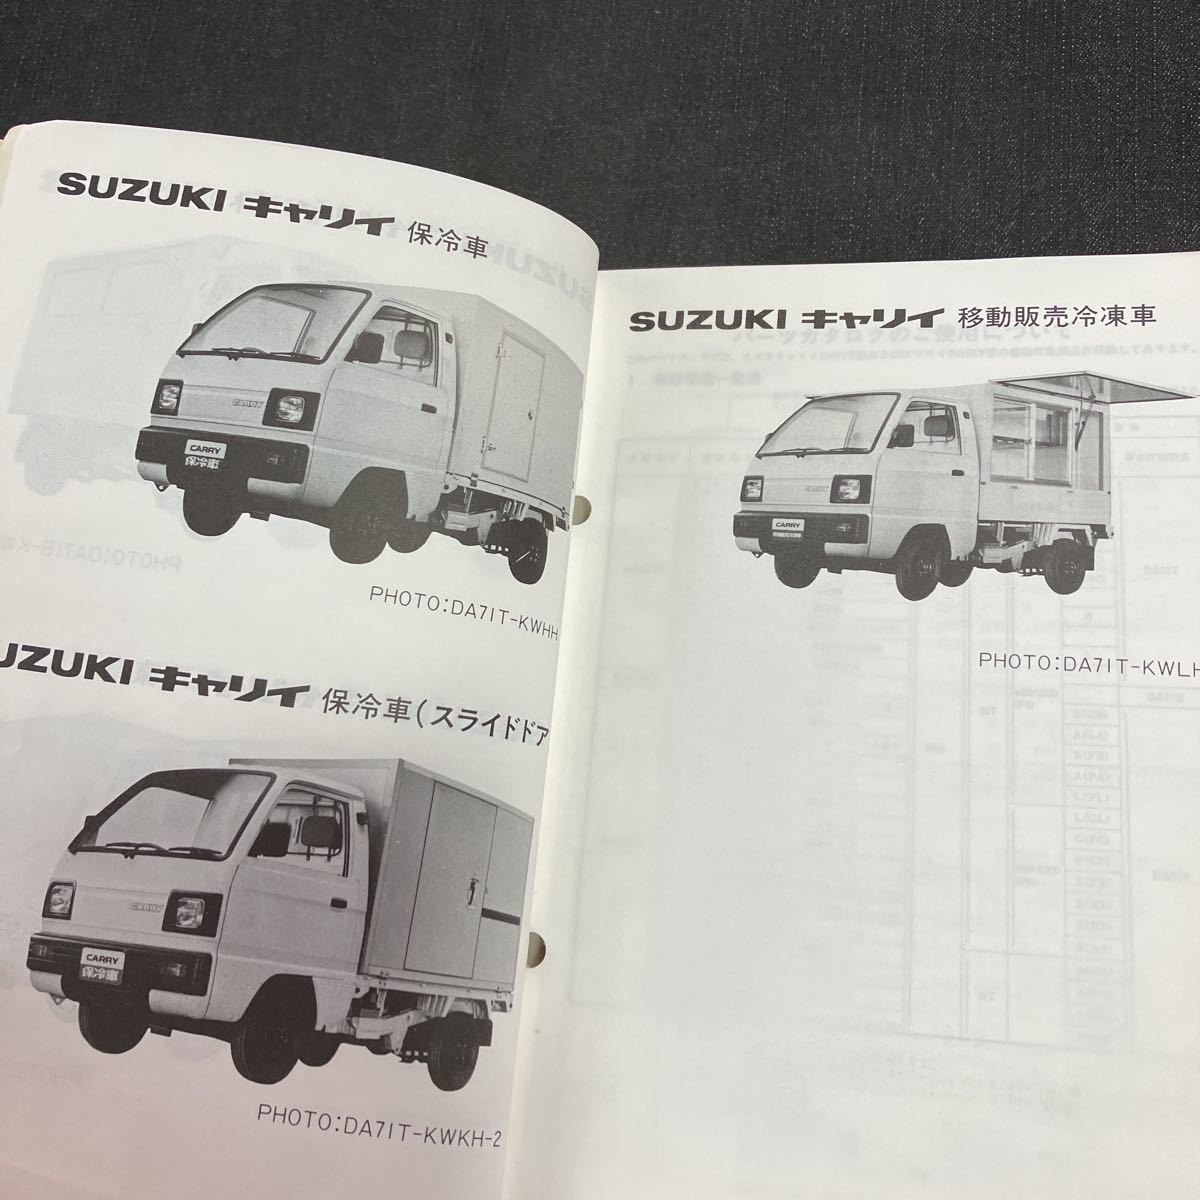 p070900 Suzuki DA71T(1*2)DA71V(1*2)DA71B(1*2) parts catalog 1990 year 1 month model specification number 5204 5205 5206 special edition Joy Pop 